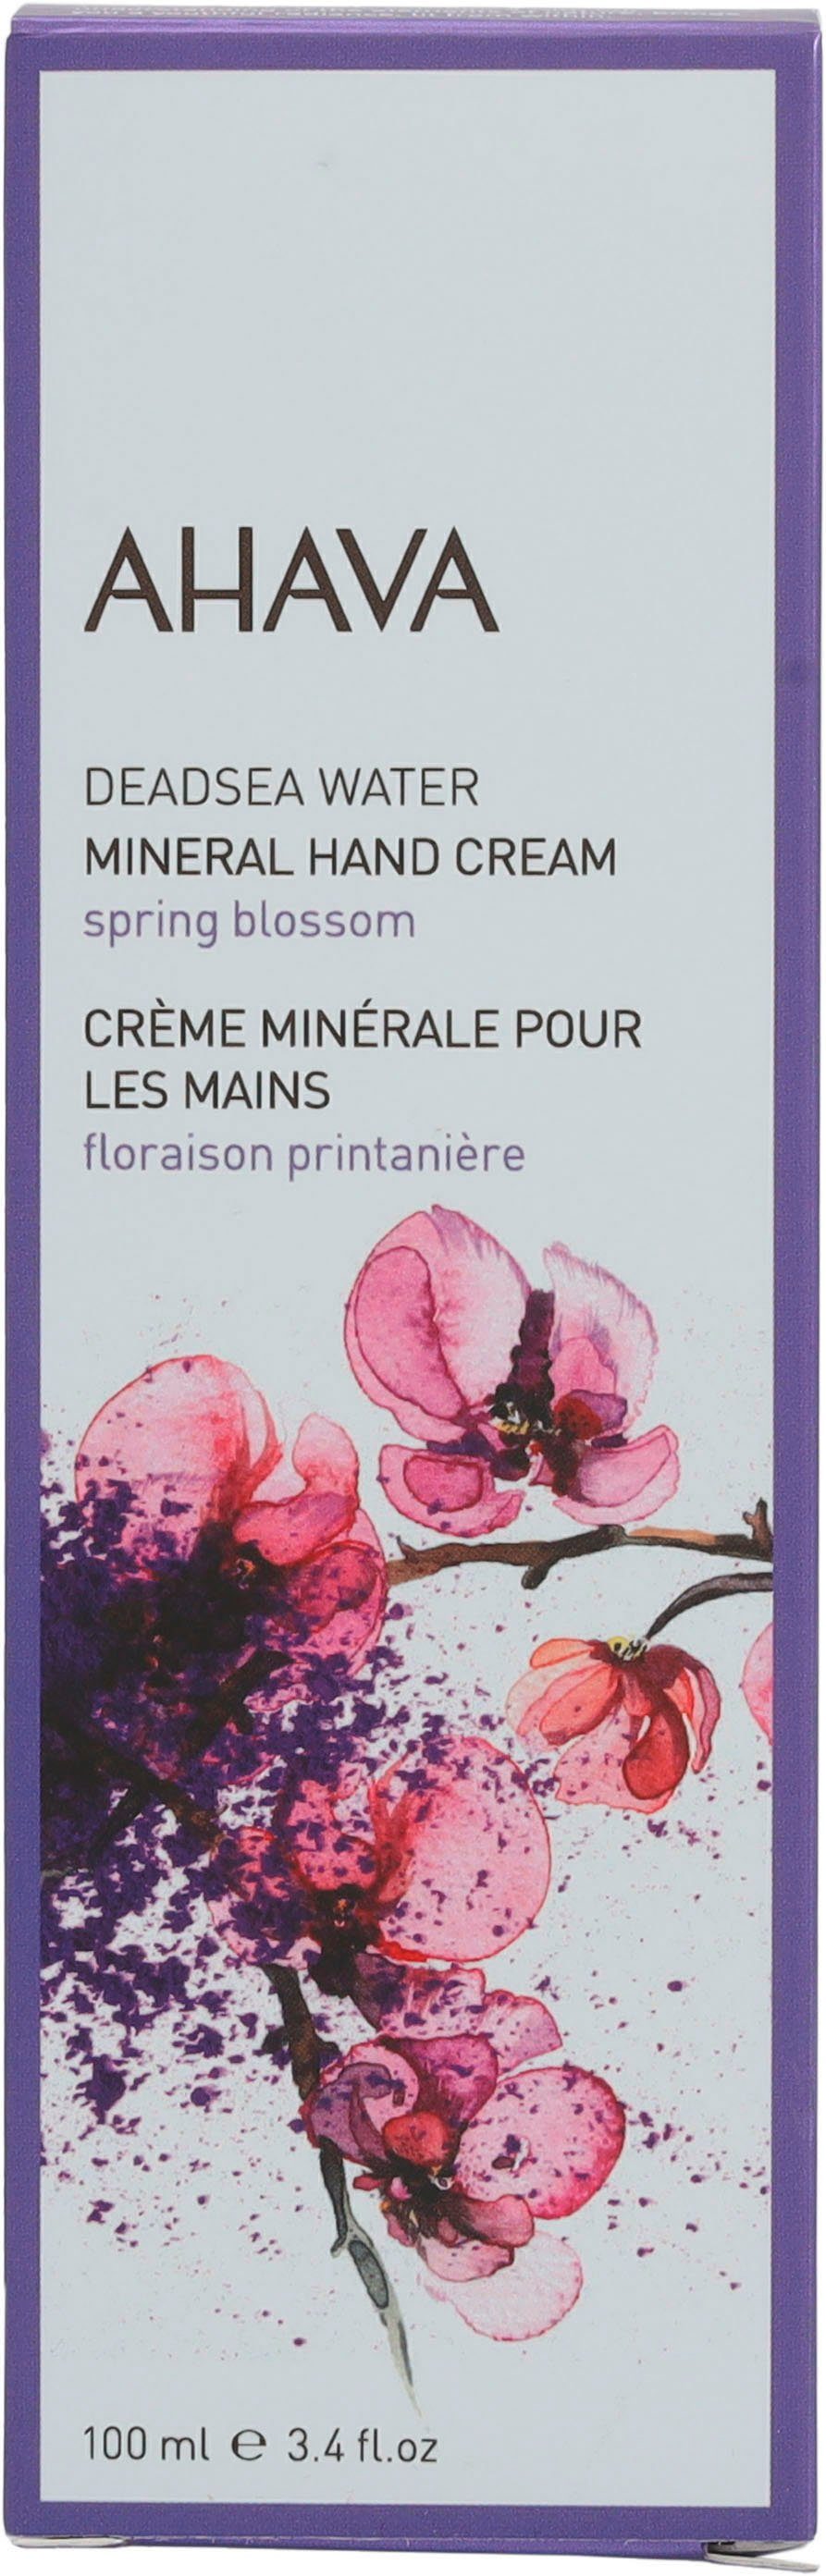 Blossom Water AHAVA Hand Handcreme Mineral Deadsea Cream Spring